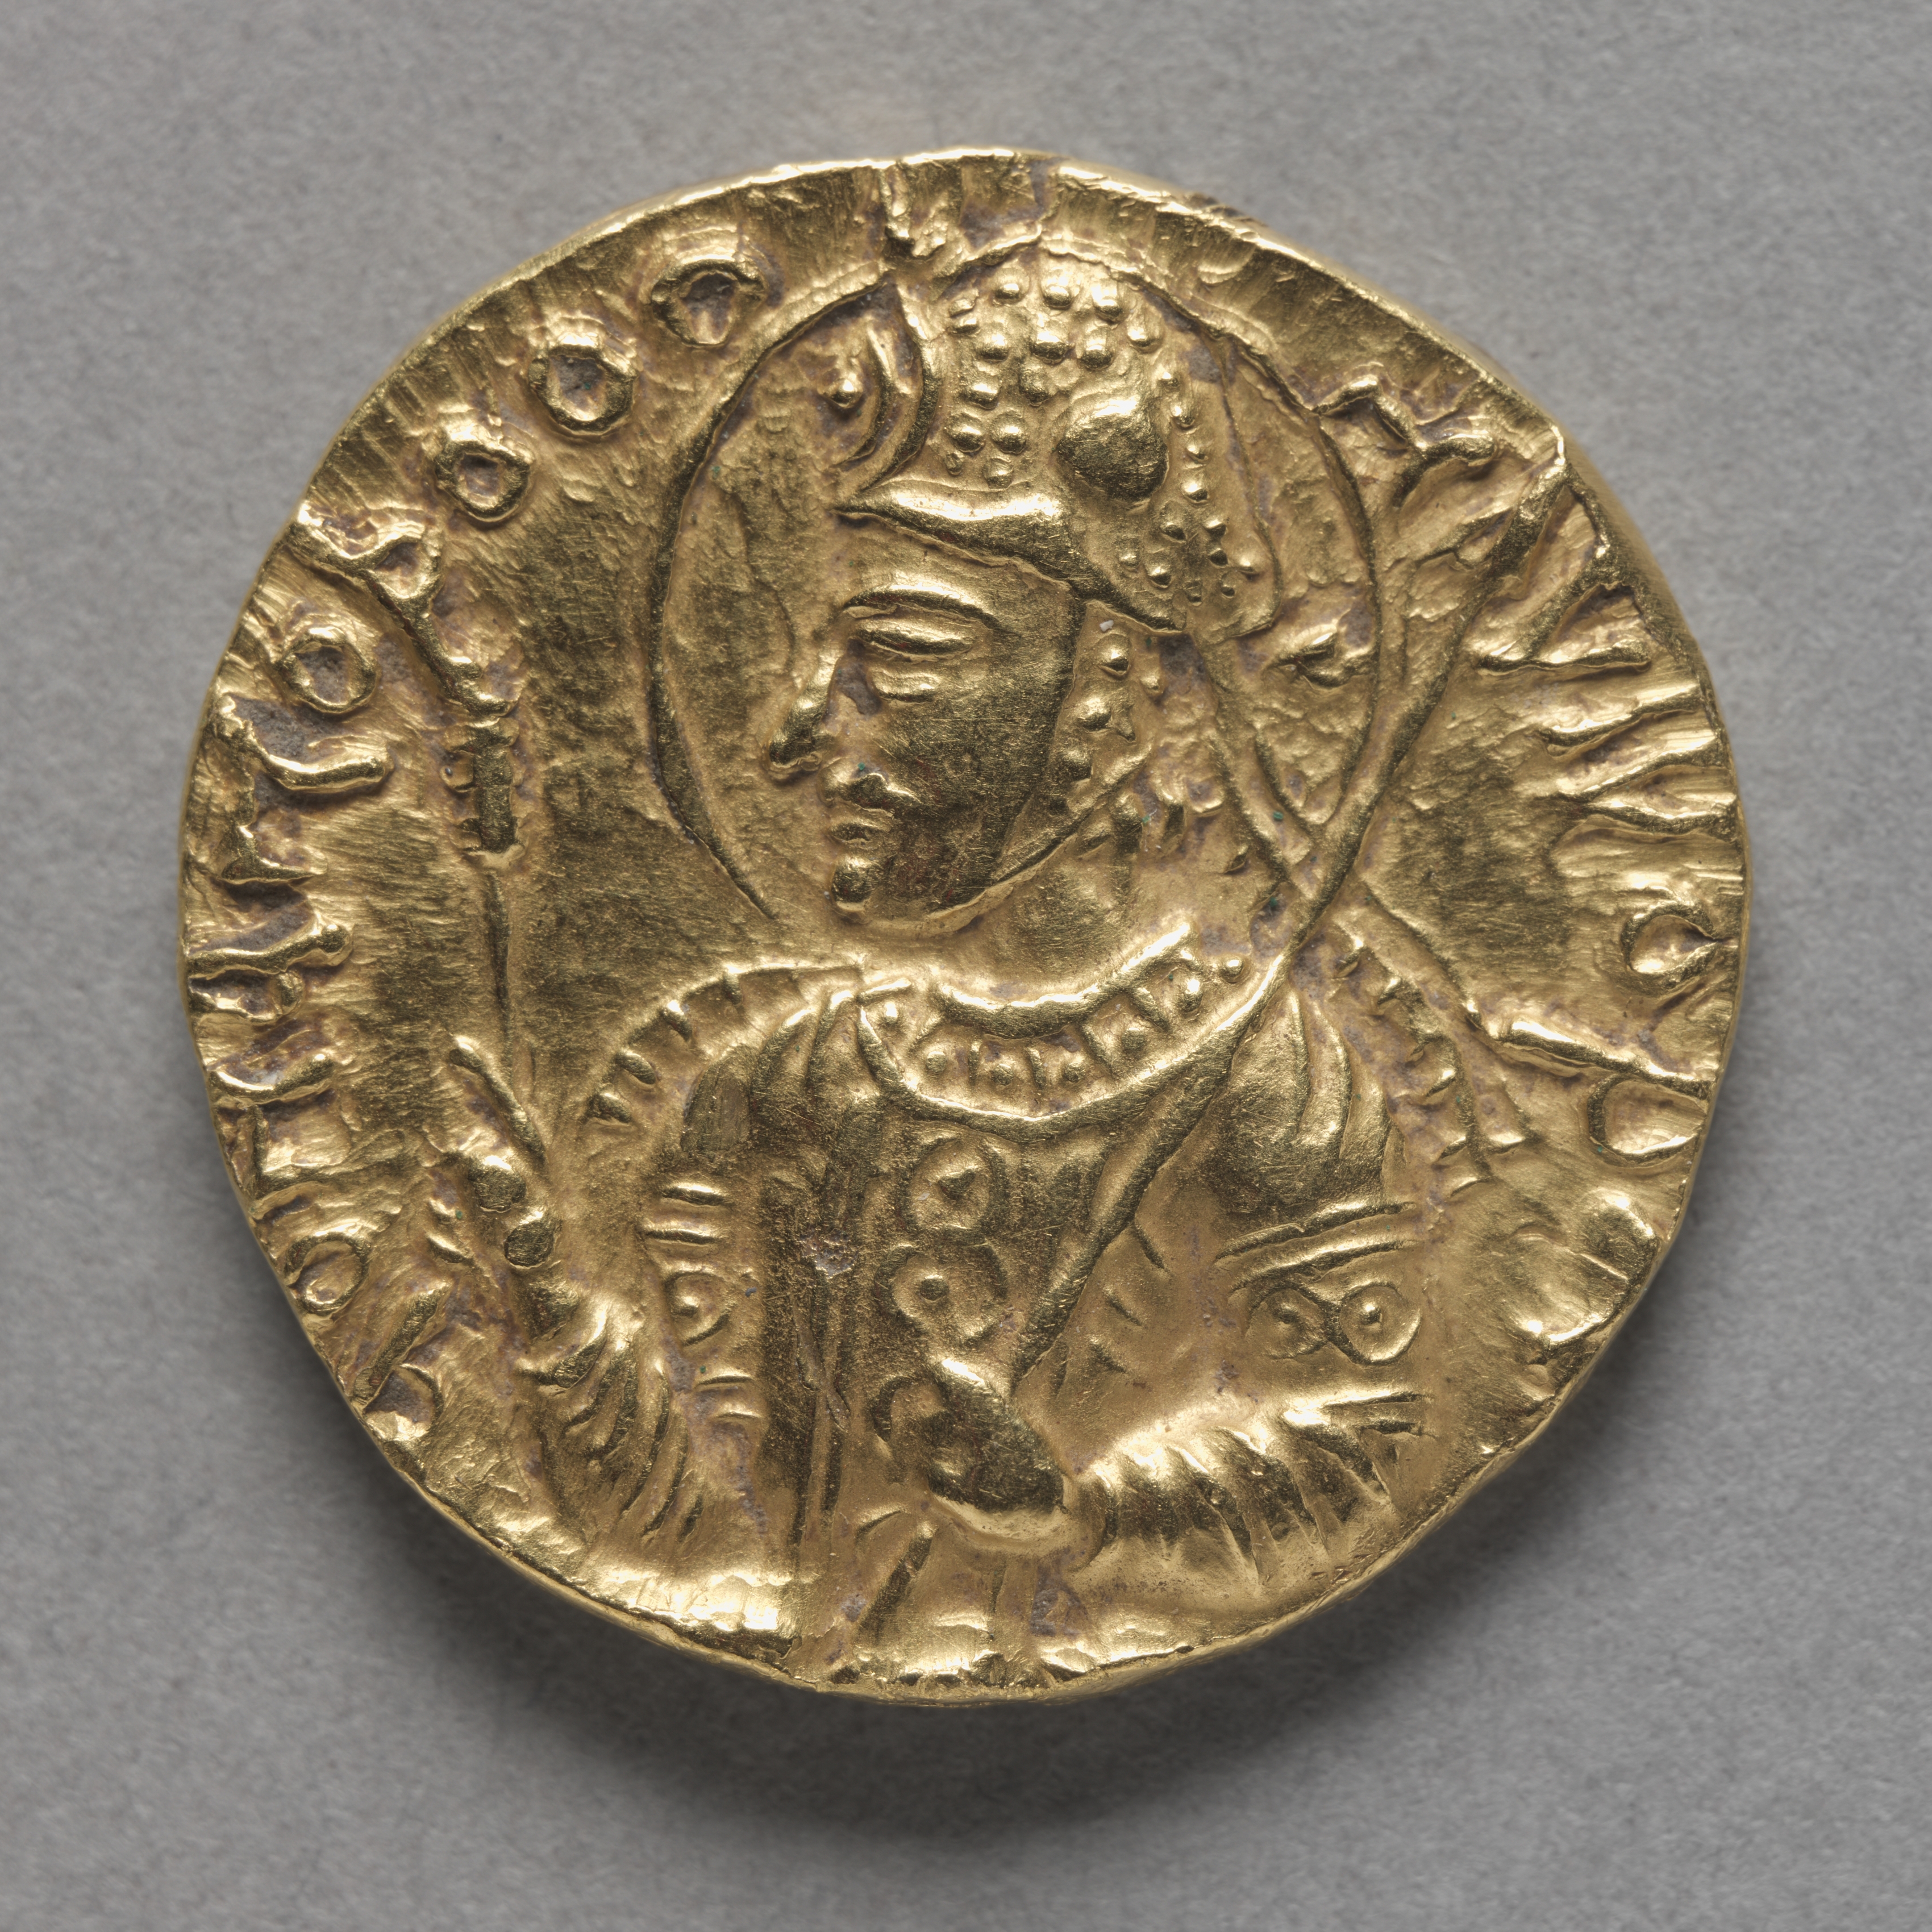 Coin: Havishka (obverse)